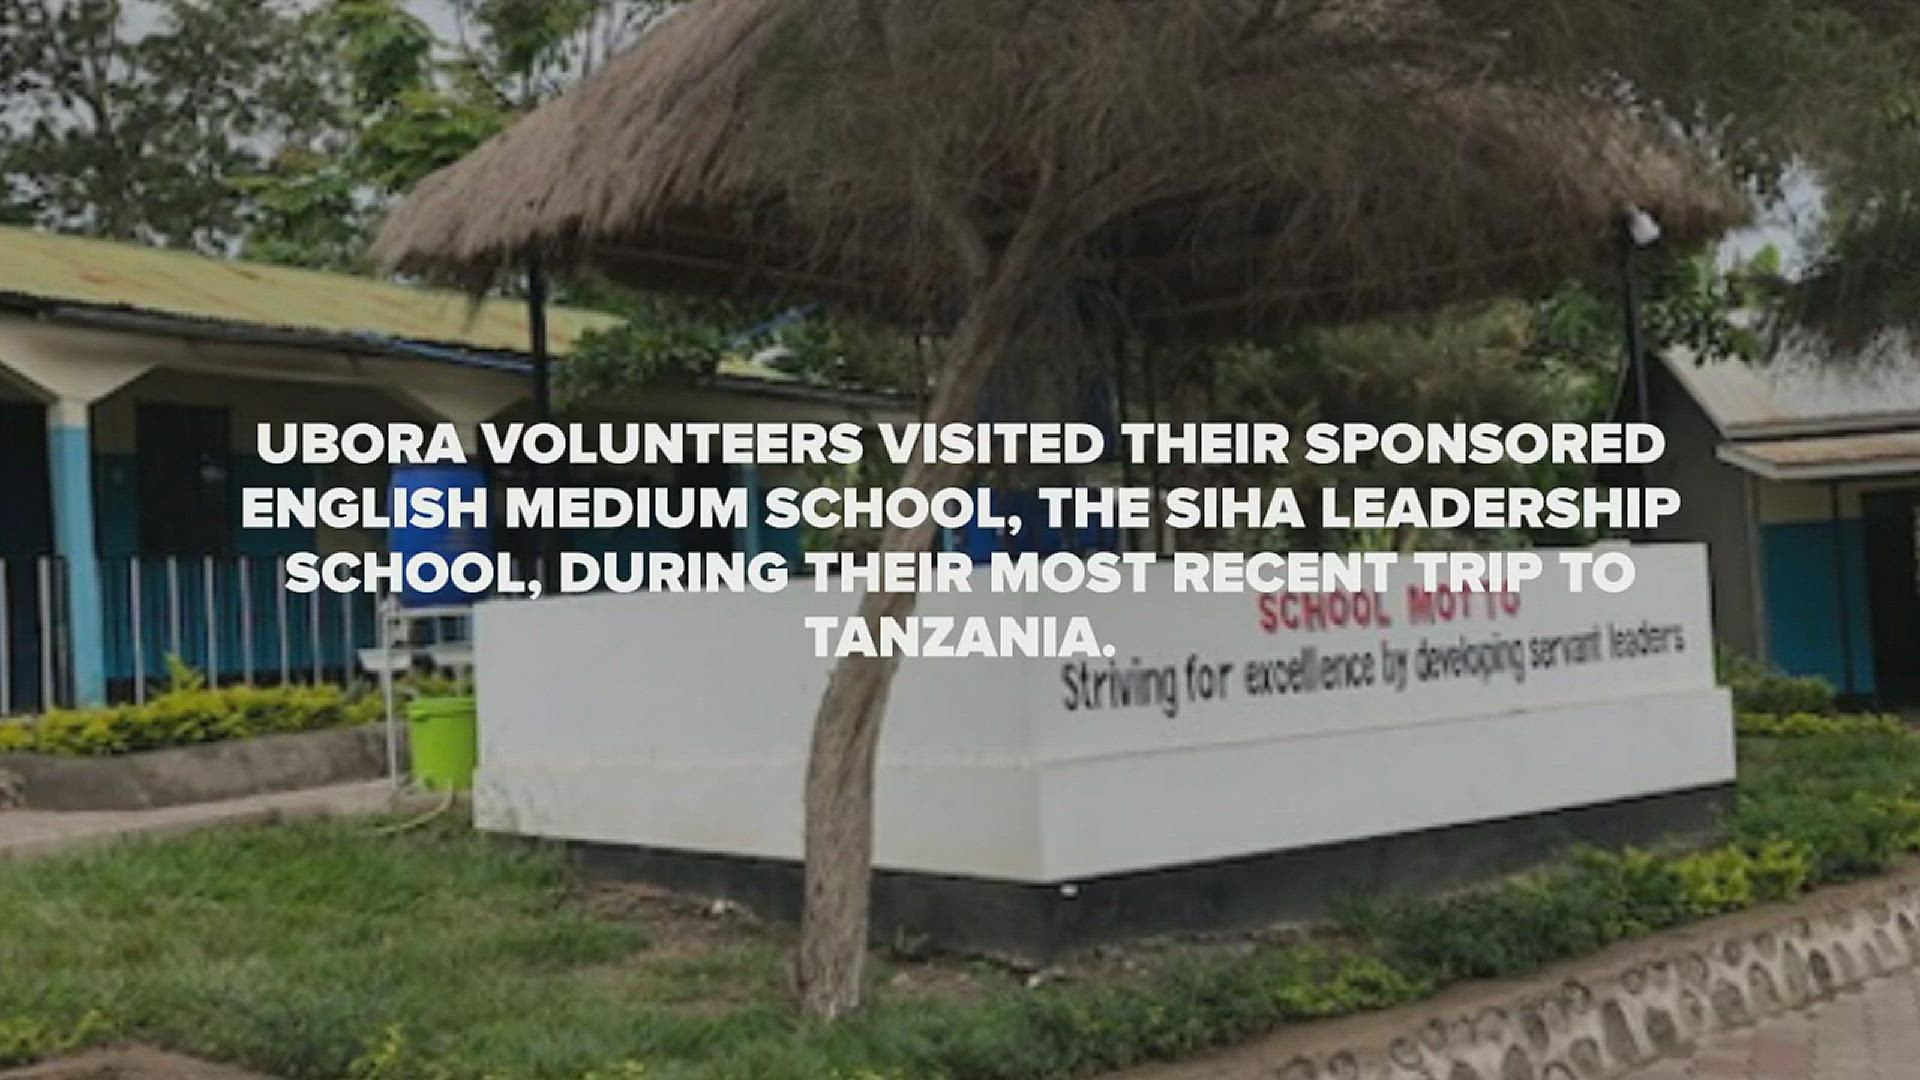 Volunteers during their most recent visit to Tanzania celebrated the Siha Leadership School, Ubora's sponsored English medium school.